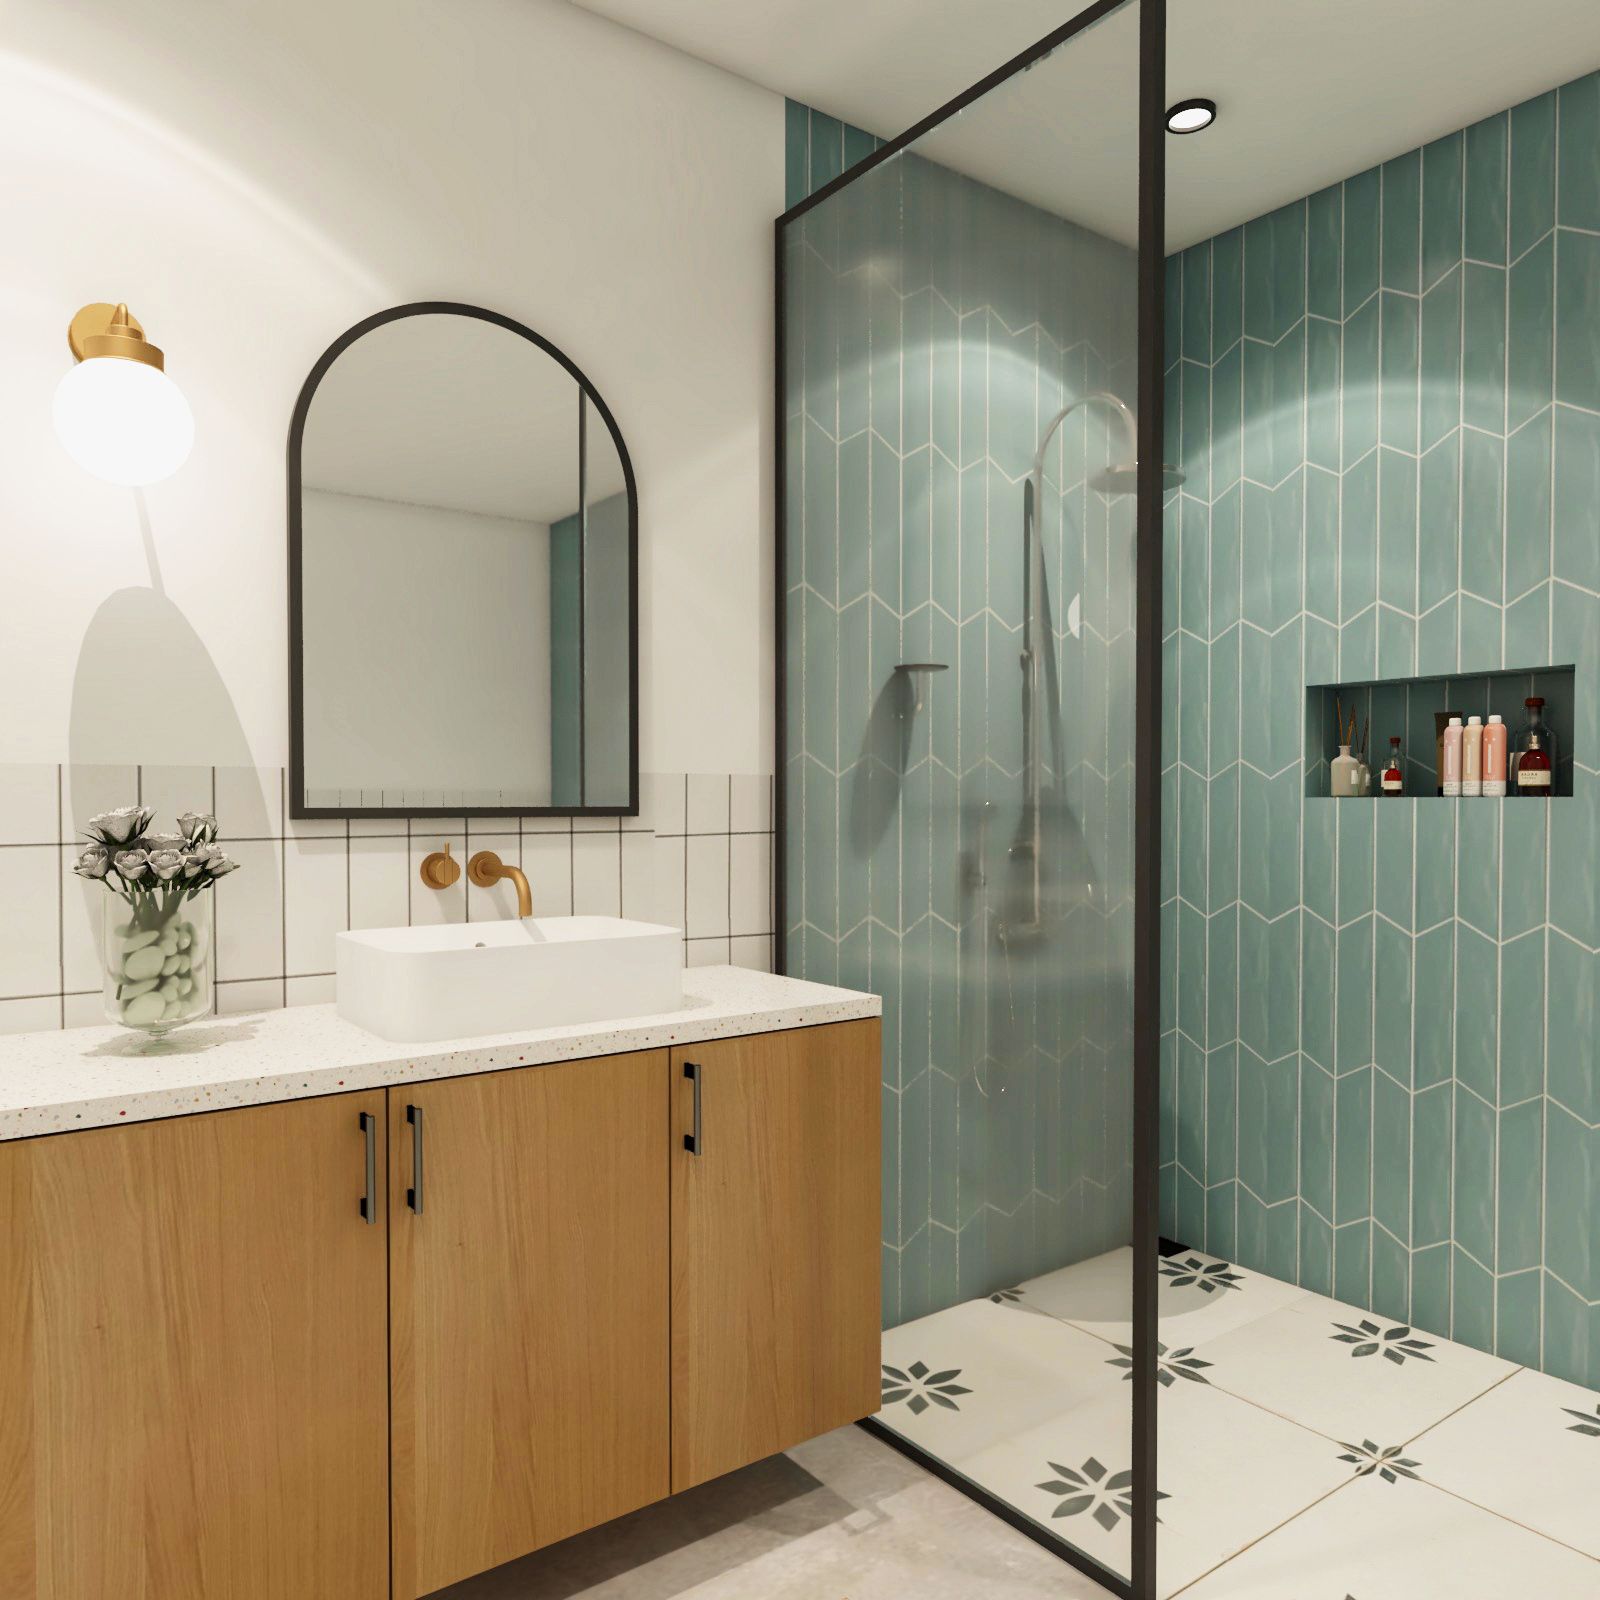 Contemporary White And Sea Green Small Bathroom Designs With White Corian Bathroom Countertop